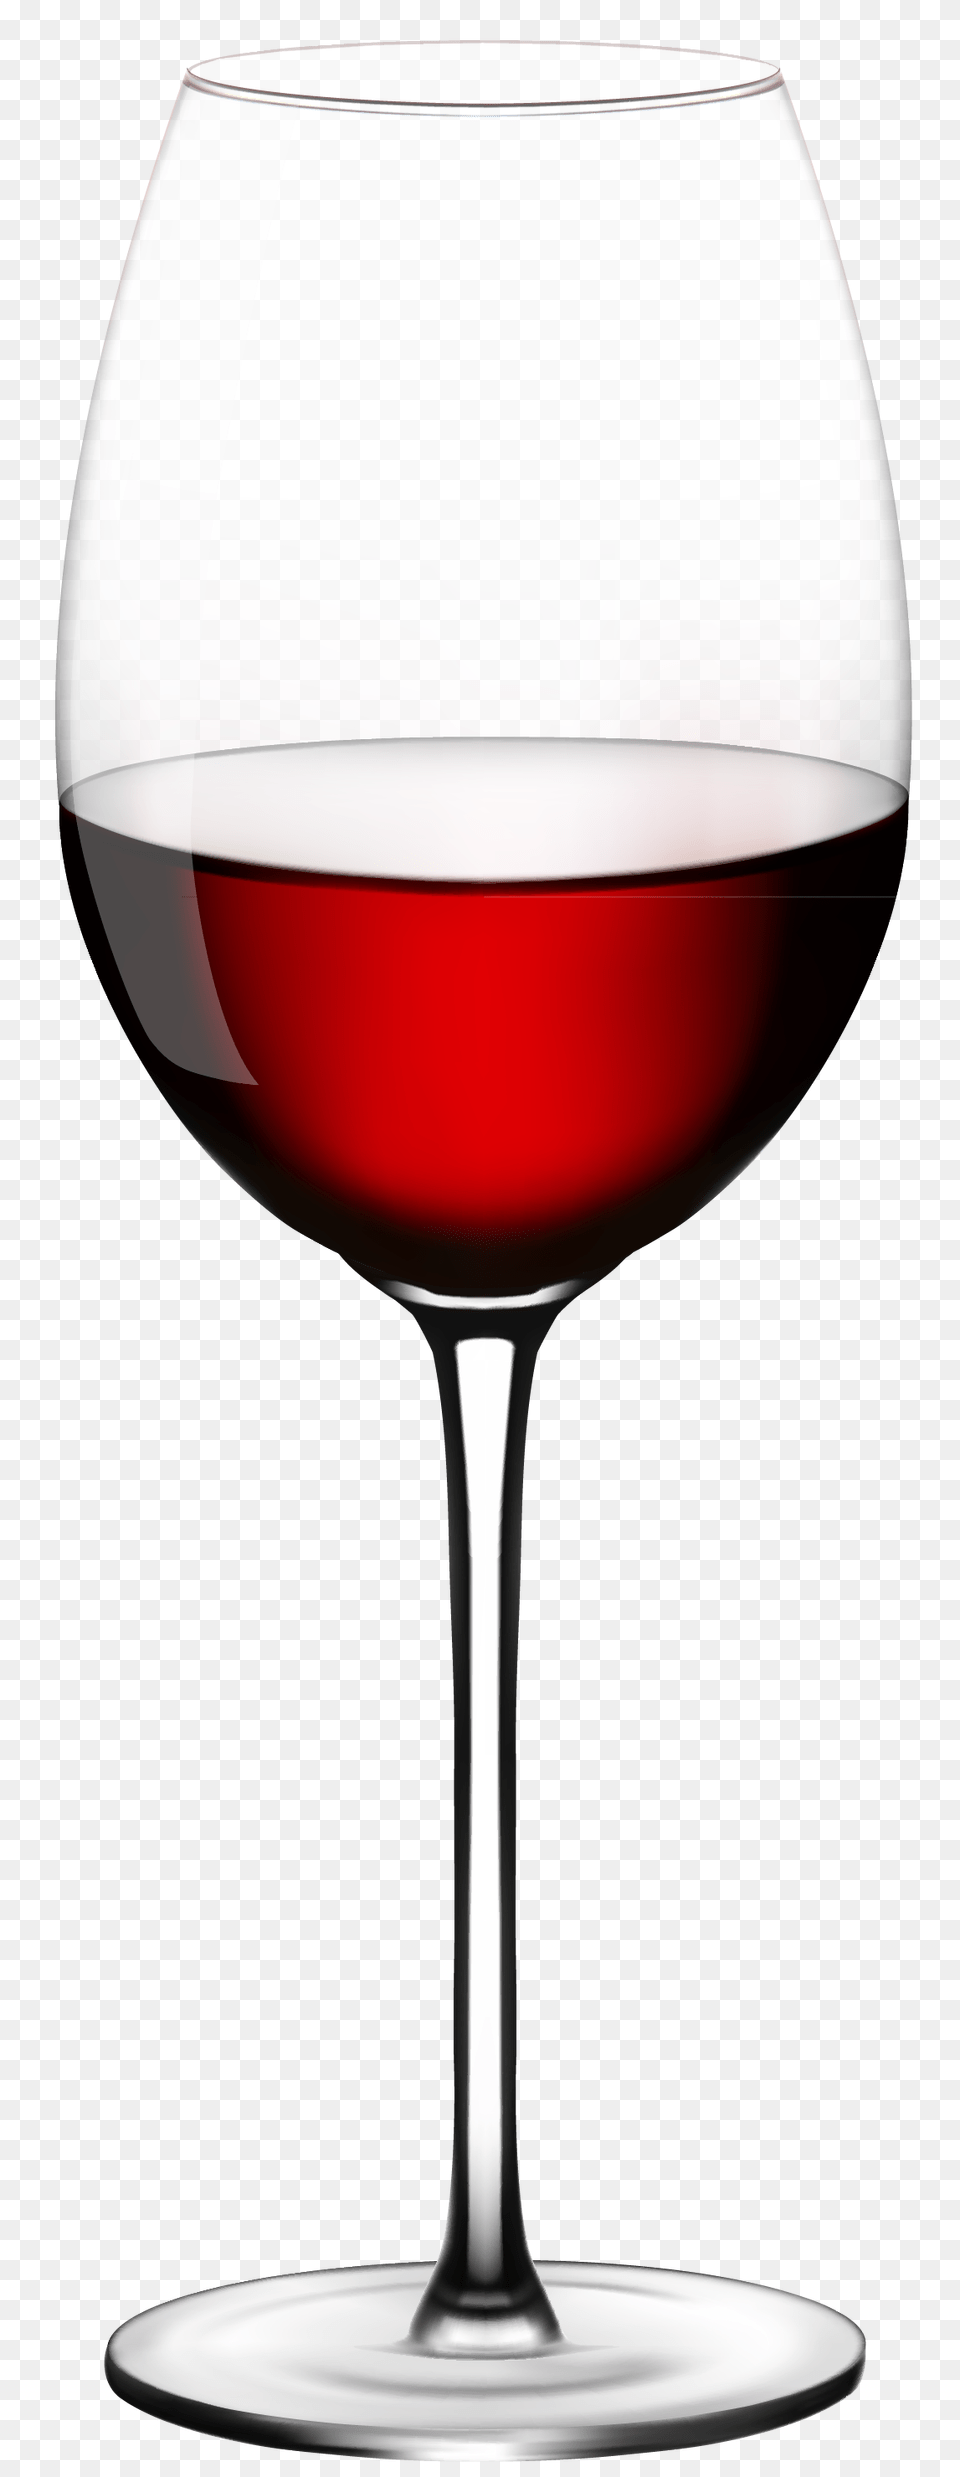 Wine Glass Clip Art, Alcohol, Red Wine, Liquor, Beverage Png Image